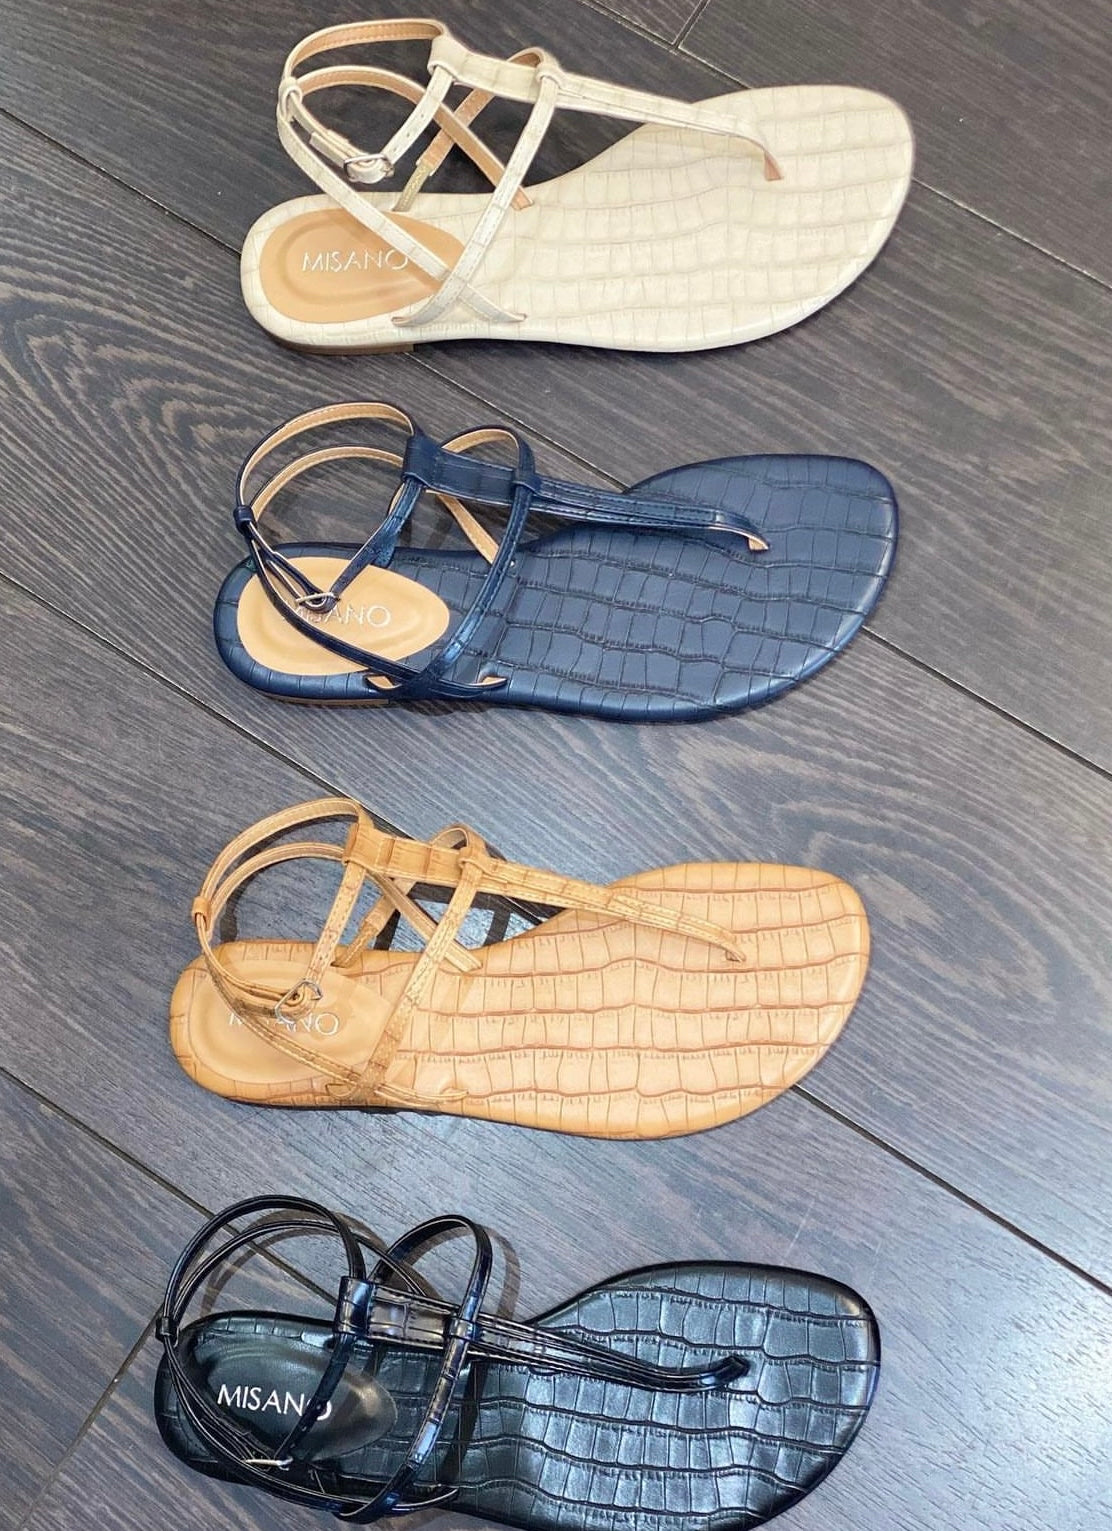 SHIZU CROC BLACK - MISANO - 36, 37, 38, 39, 40, 41, 42, BF, BLACK, on sale, womens footwear - Stomp Shoes Darwin